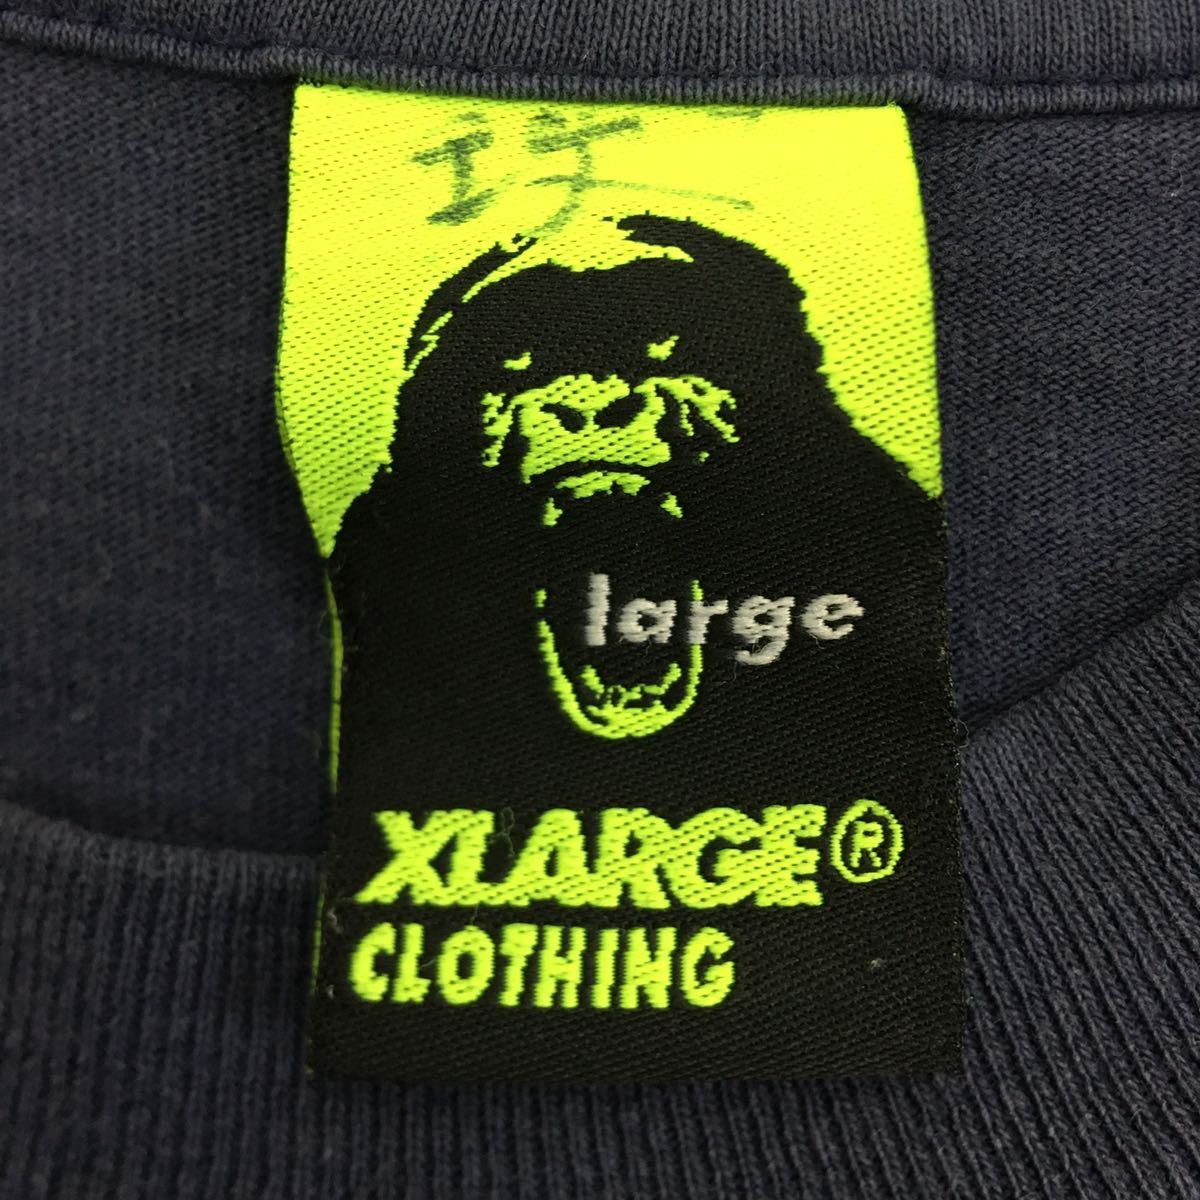  Vintage 90s[XLARGE] футболка USA производства L XLarge первый период обратная сторона . Street kaws деталь чай boys б/у одежда X Large 00s Y2K